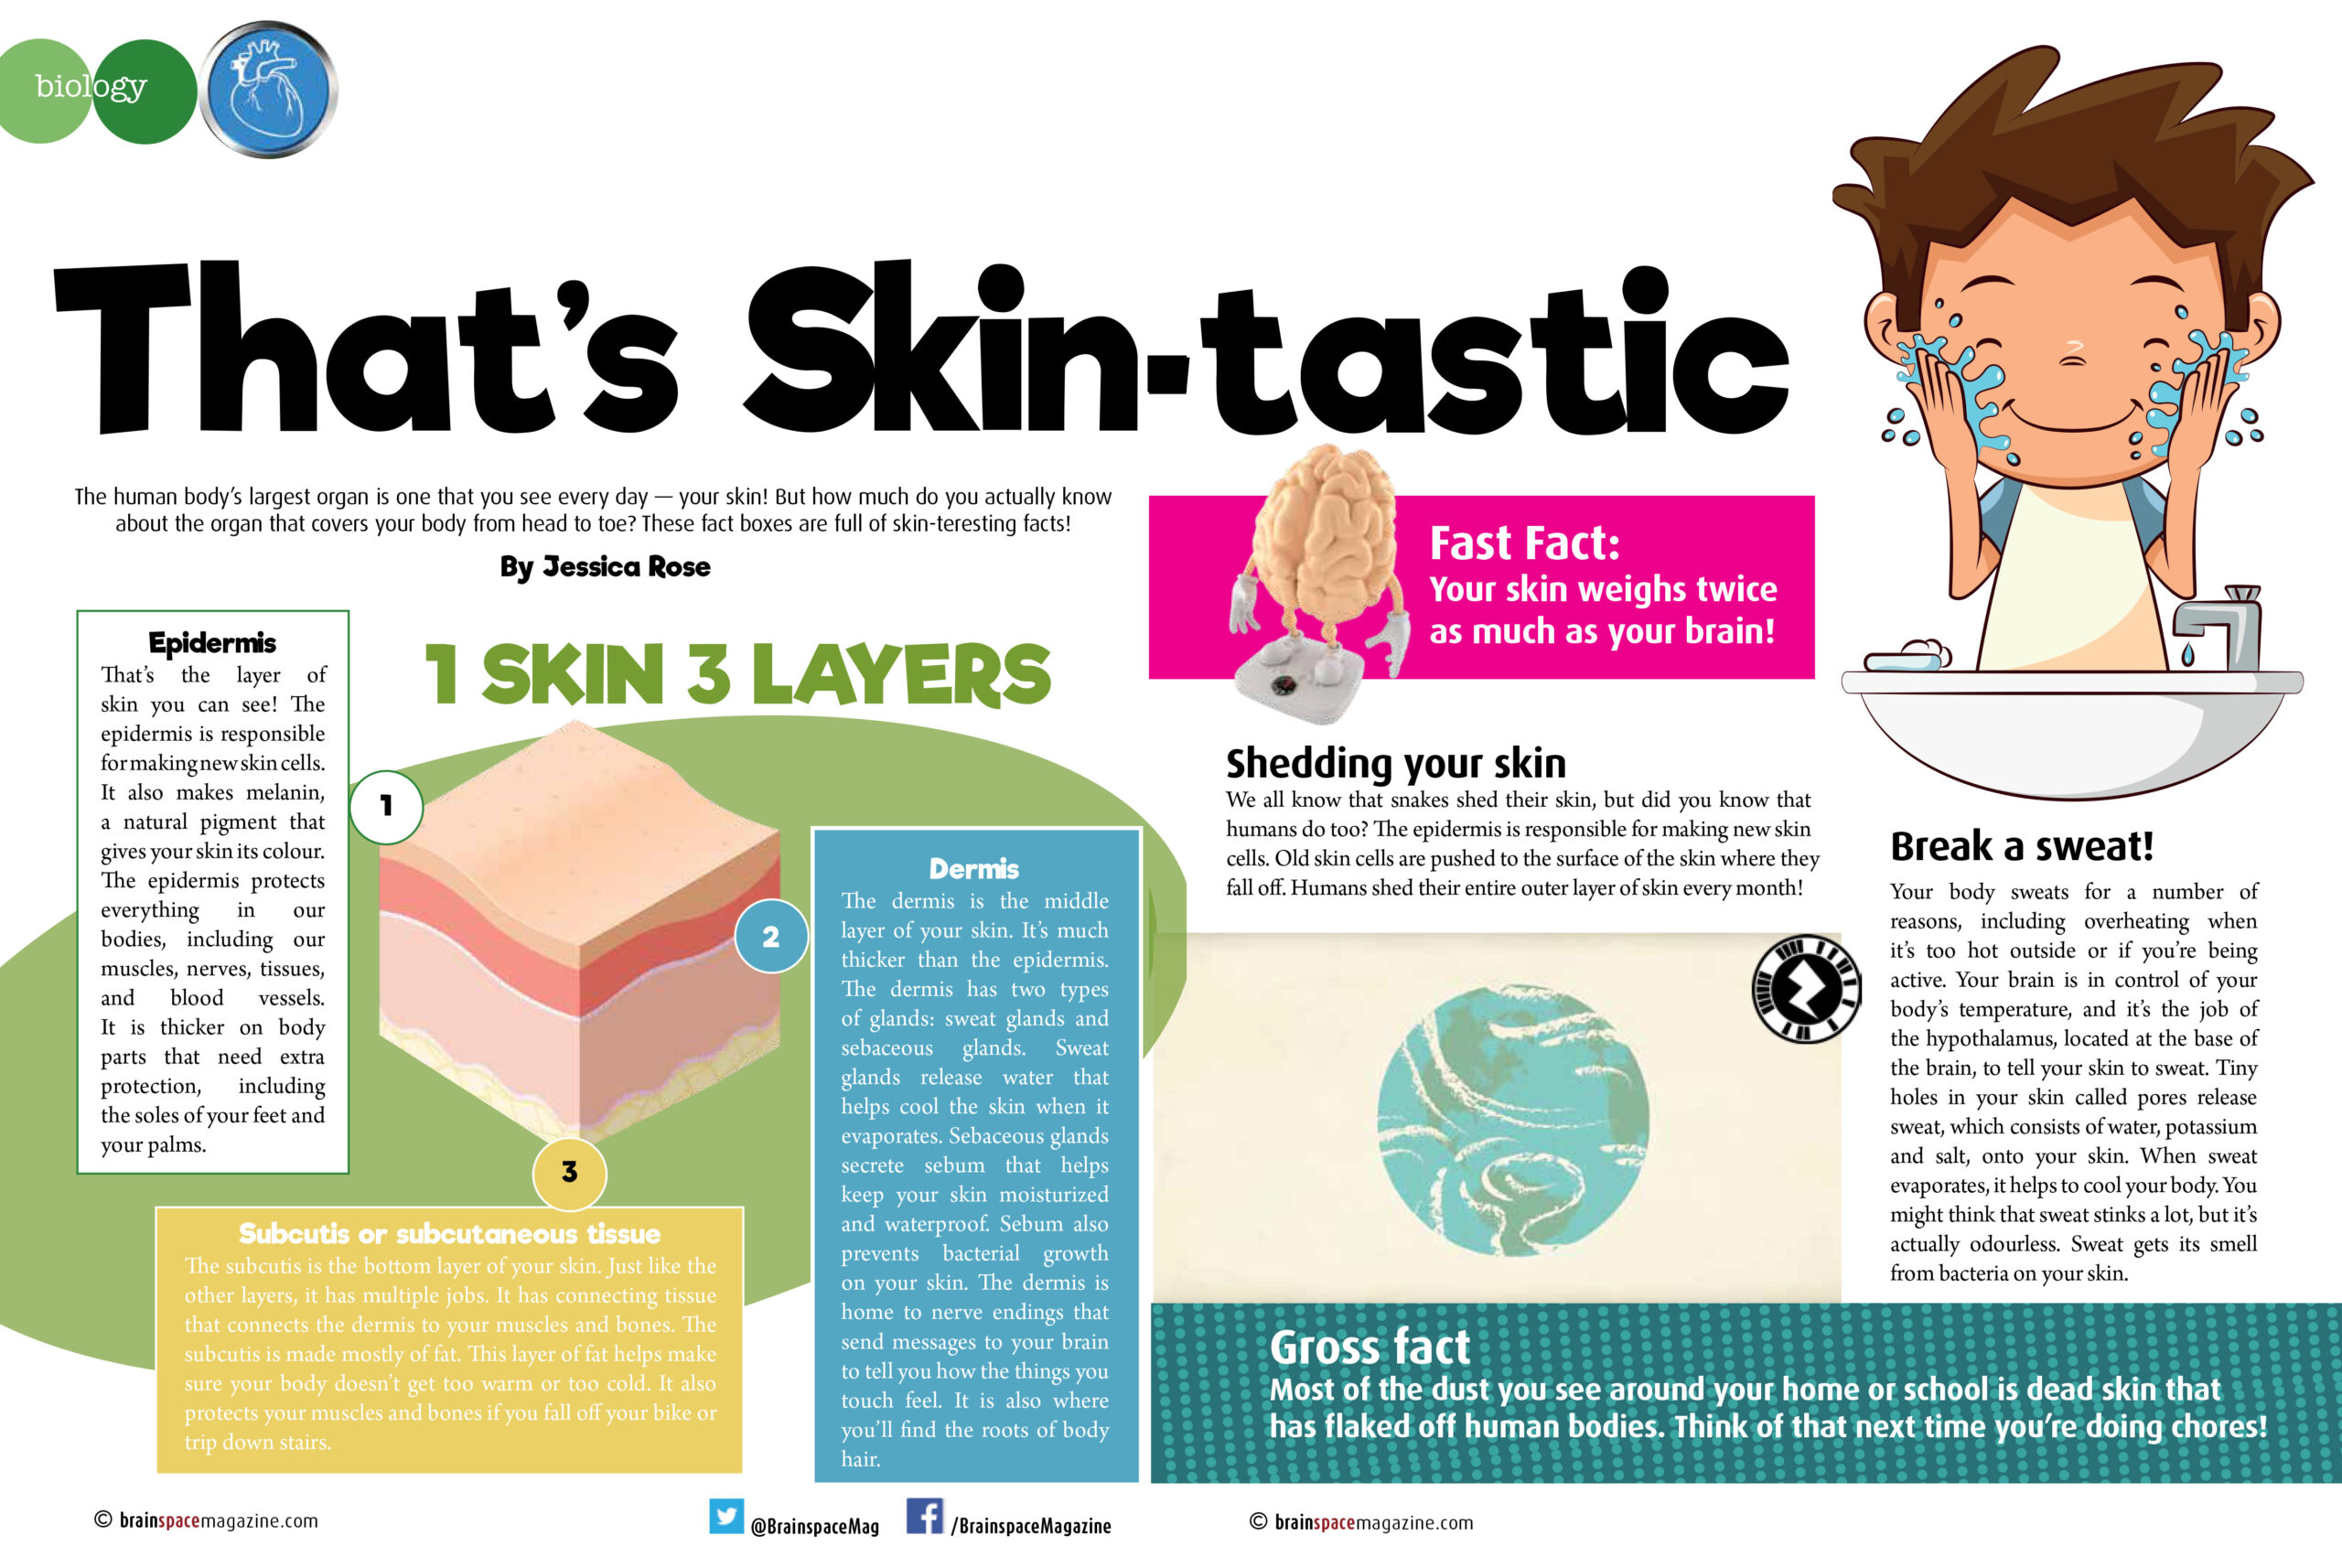 That's Skin-tastic article